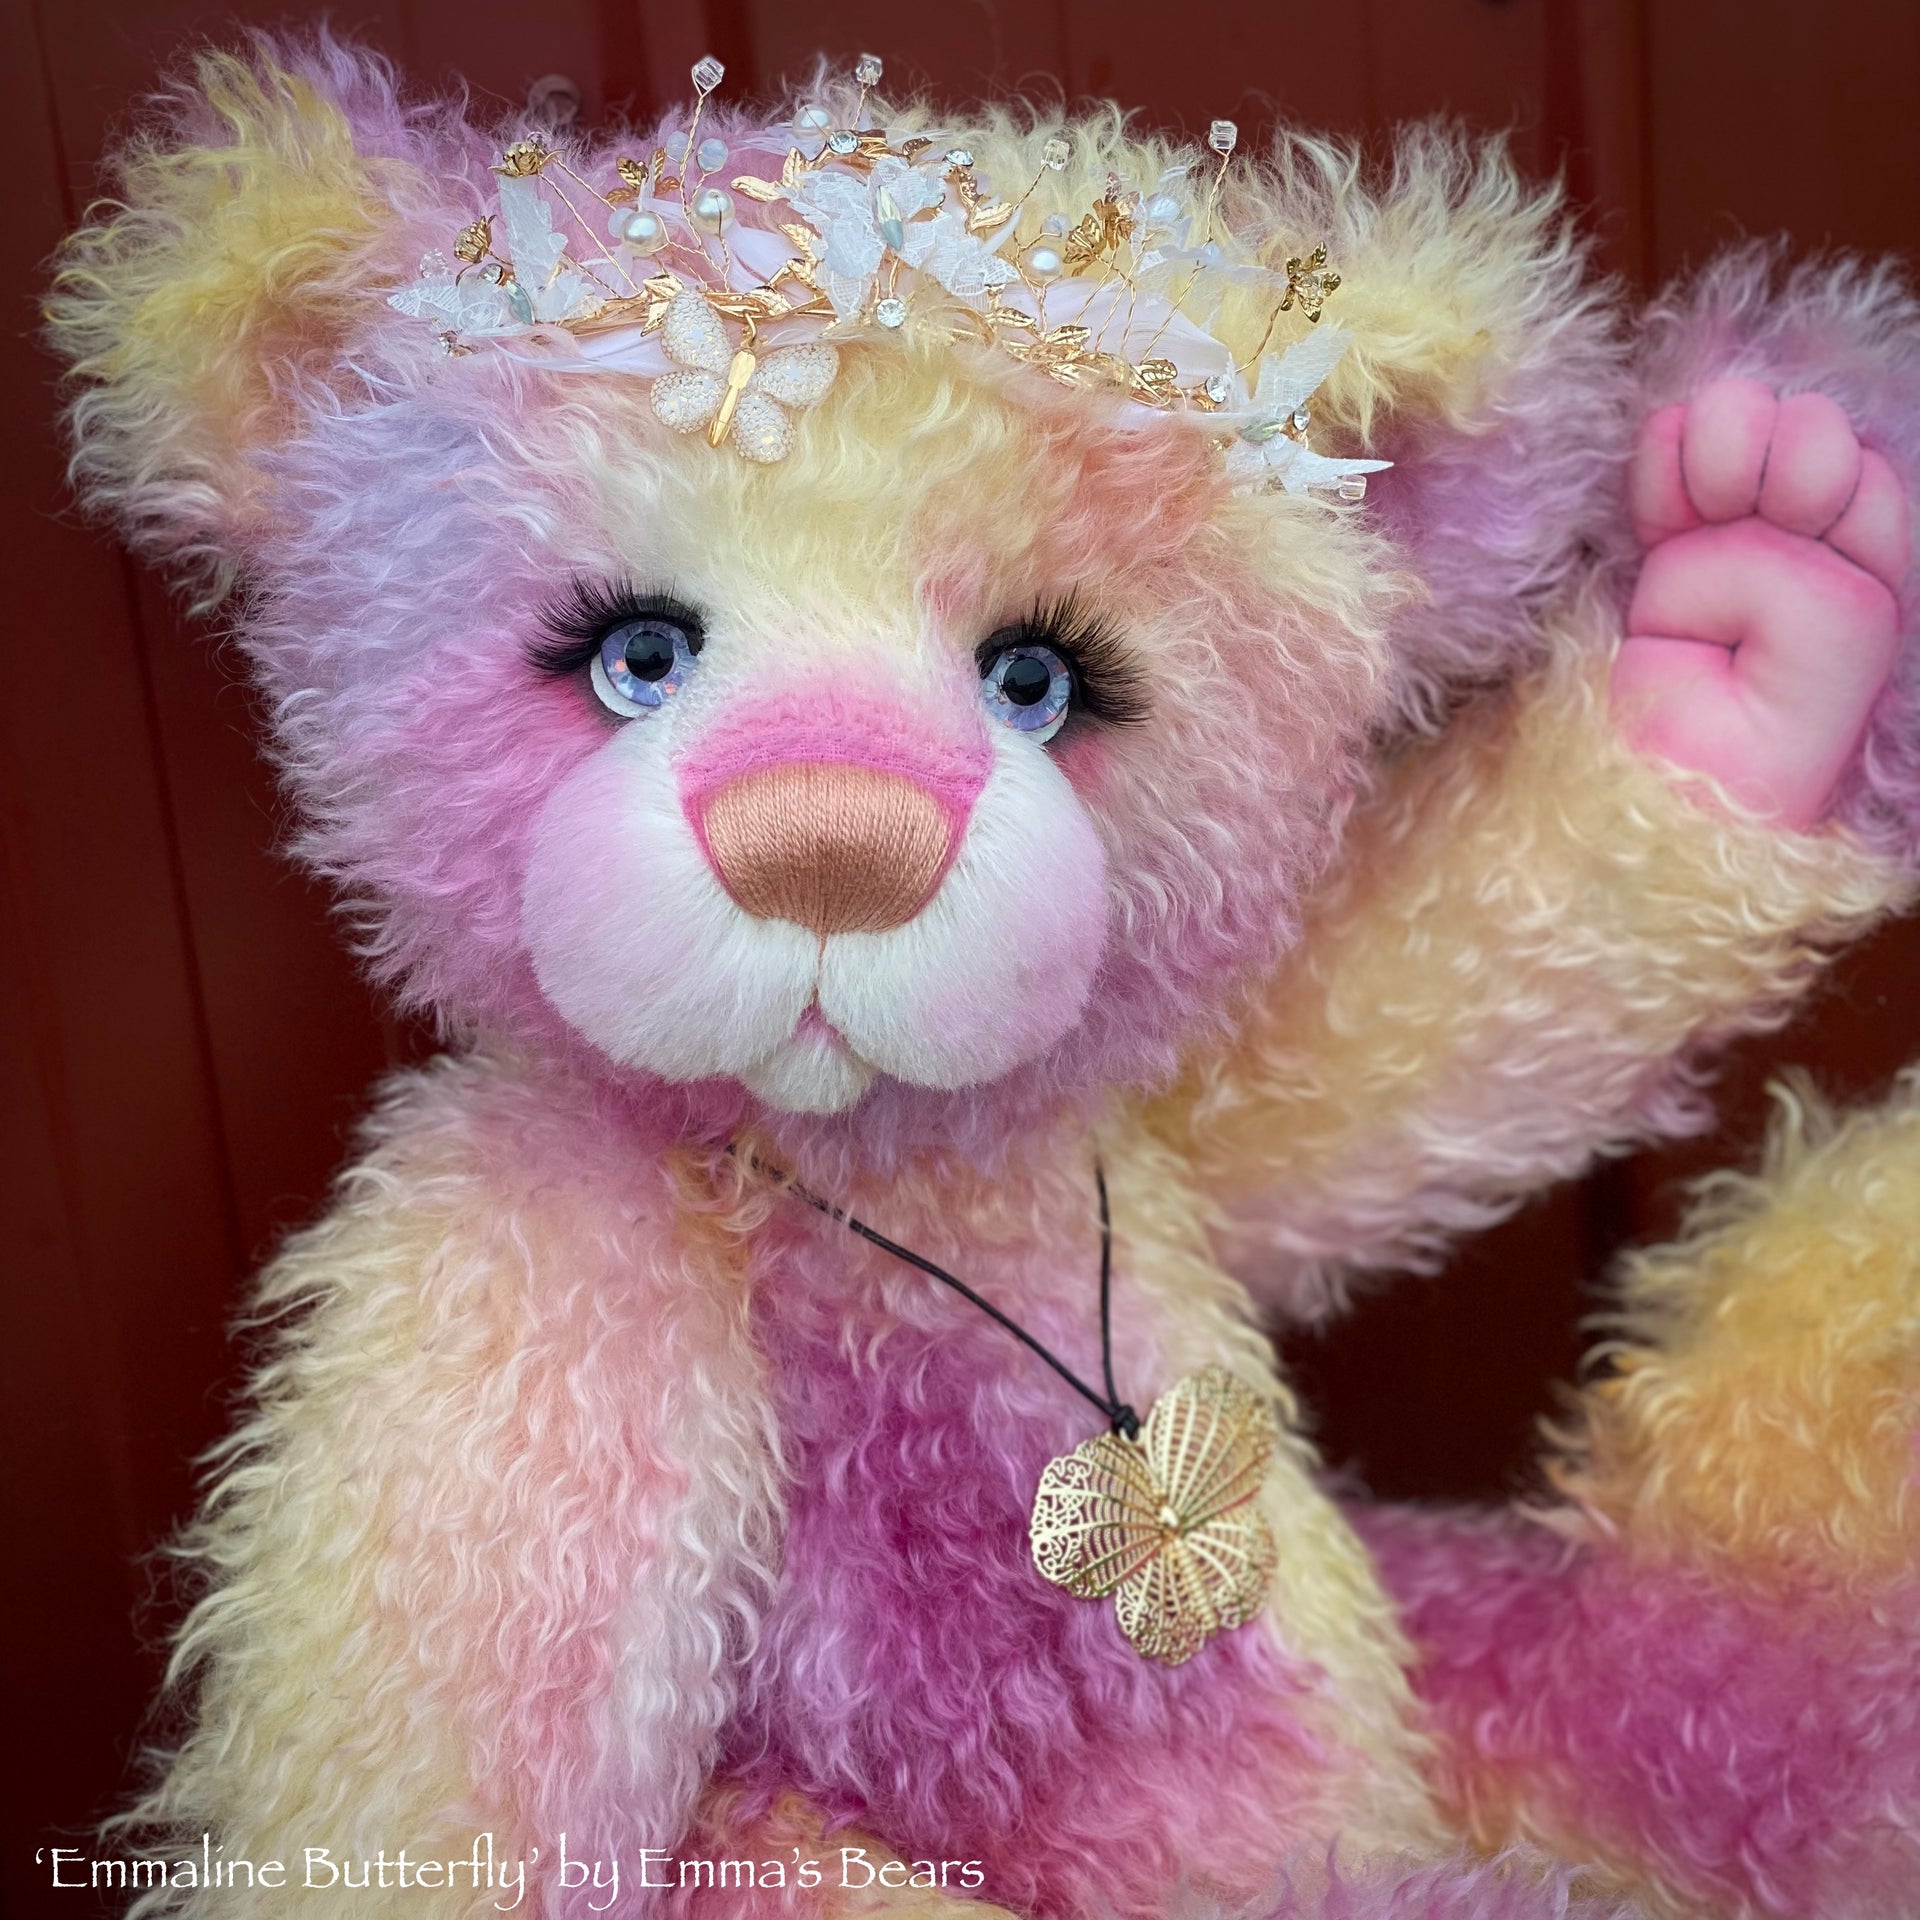 Emmaline Butterfly - 23" Hand Dyed Easter Curlylocks Mohair Artist Bear by Emma's Bears - OOAK